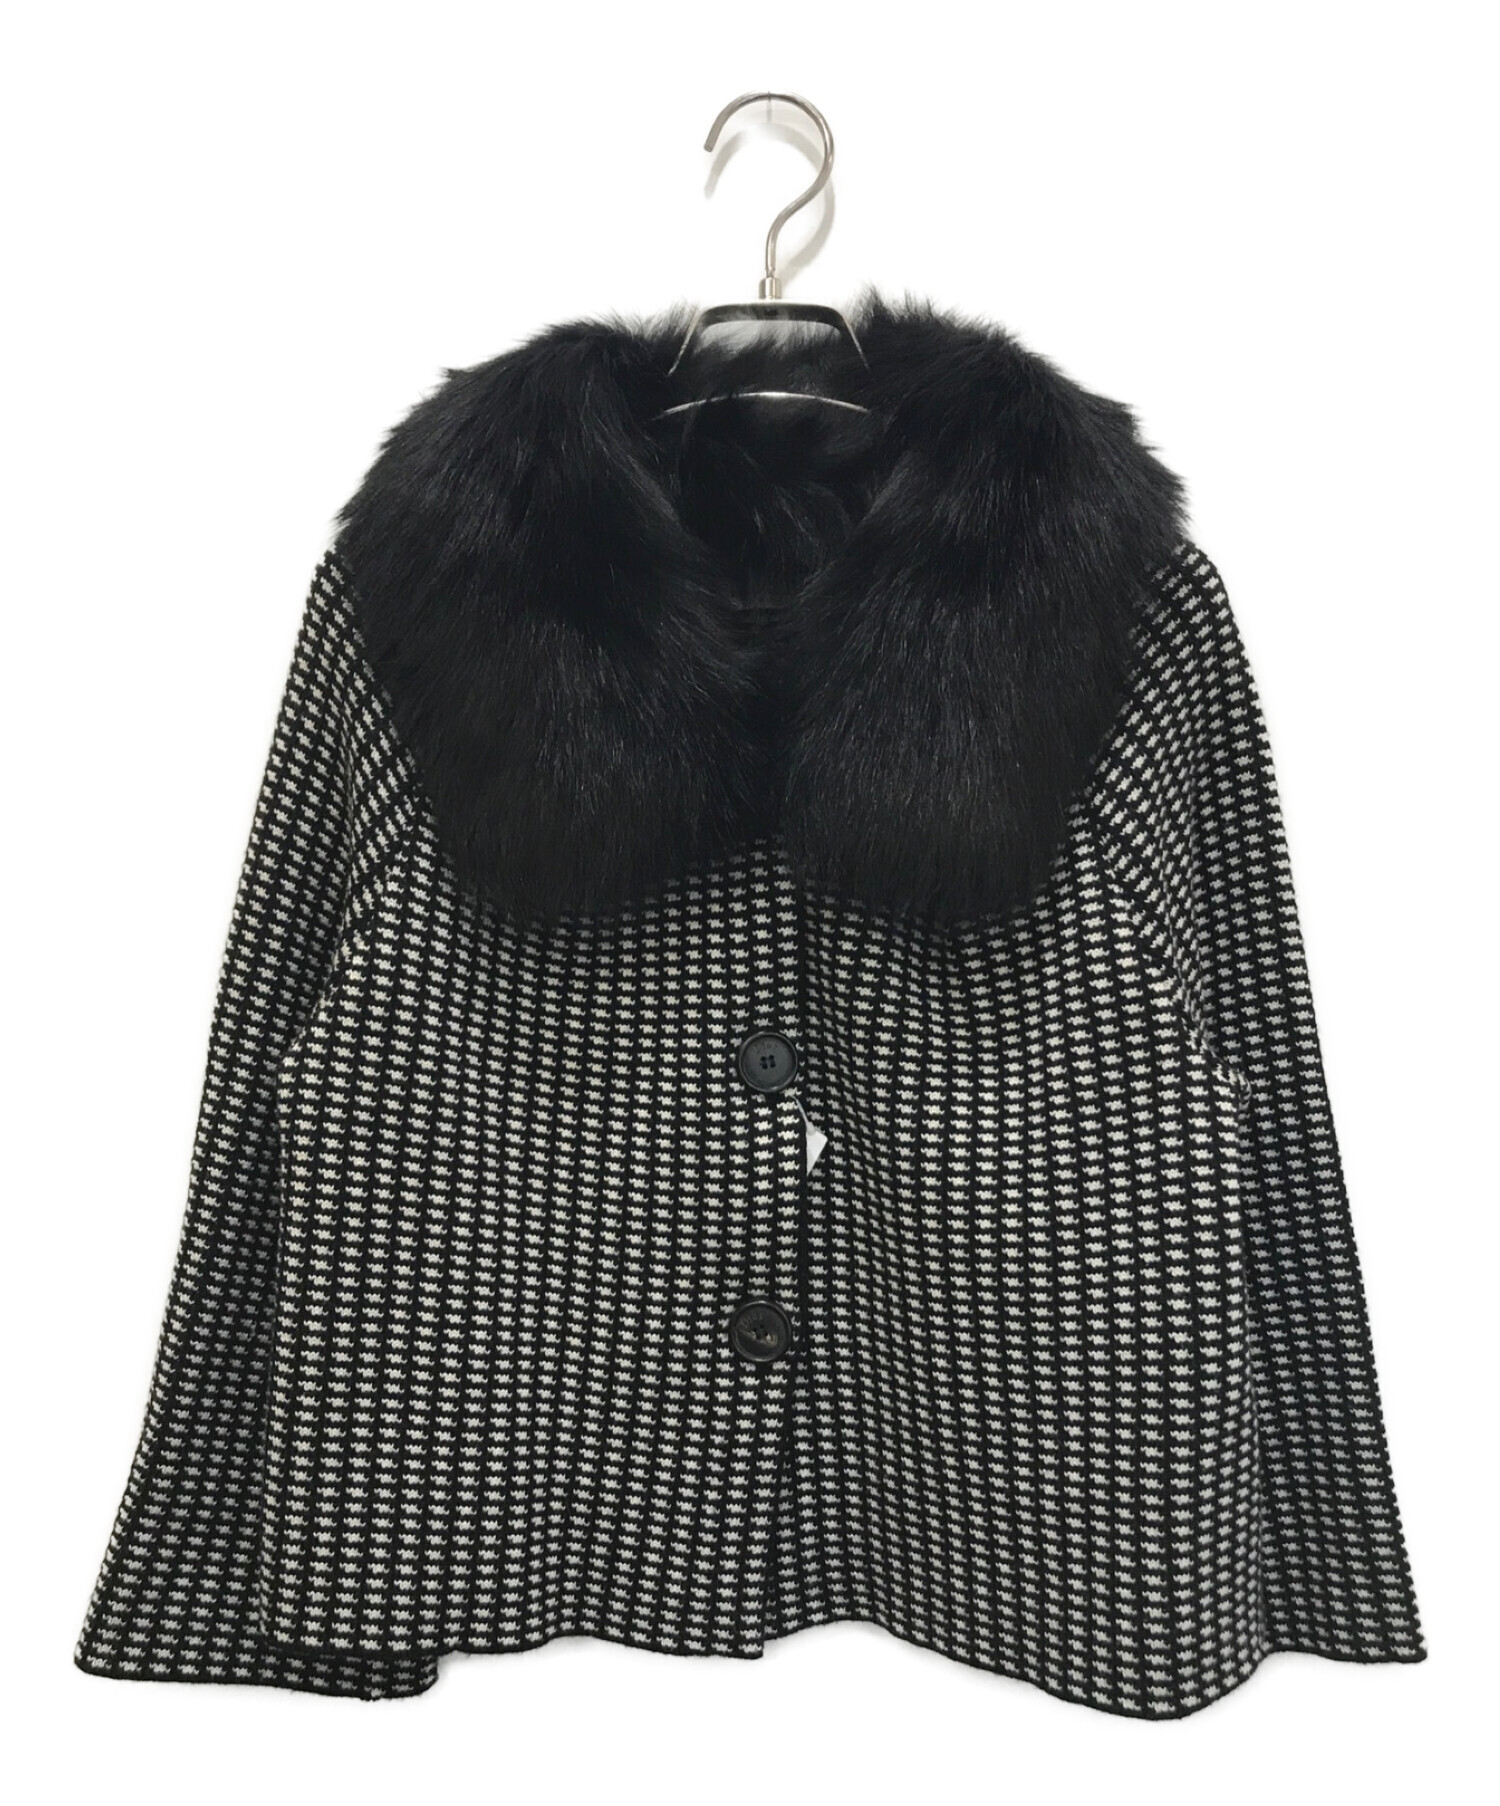 Christian Dior (クリスチャン ディオール) フォックスファー付ニットジャケット ブラック×ホワイト サイズ:34